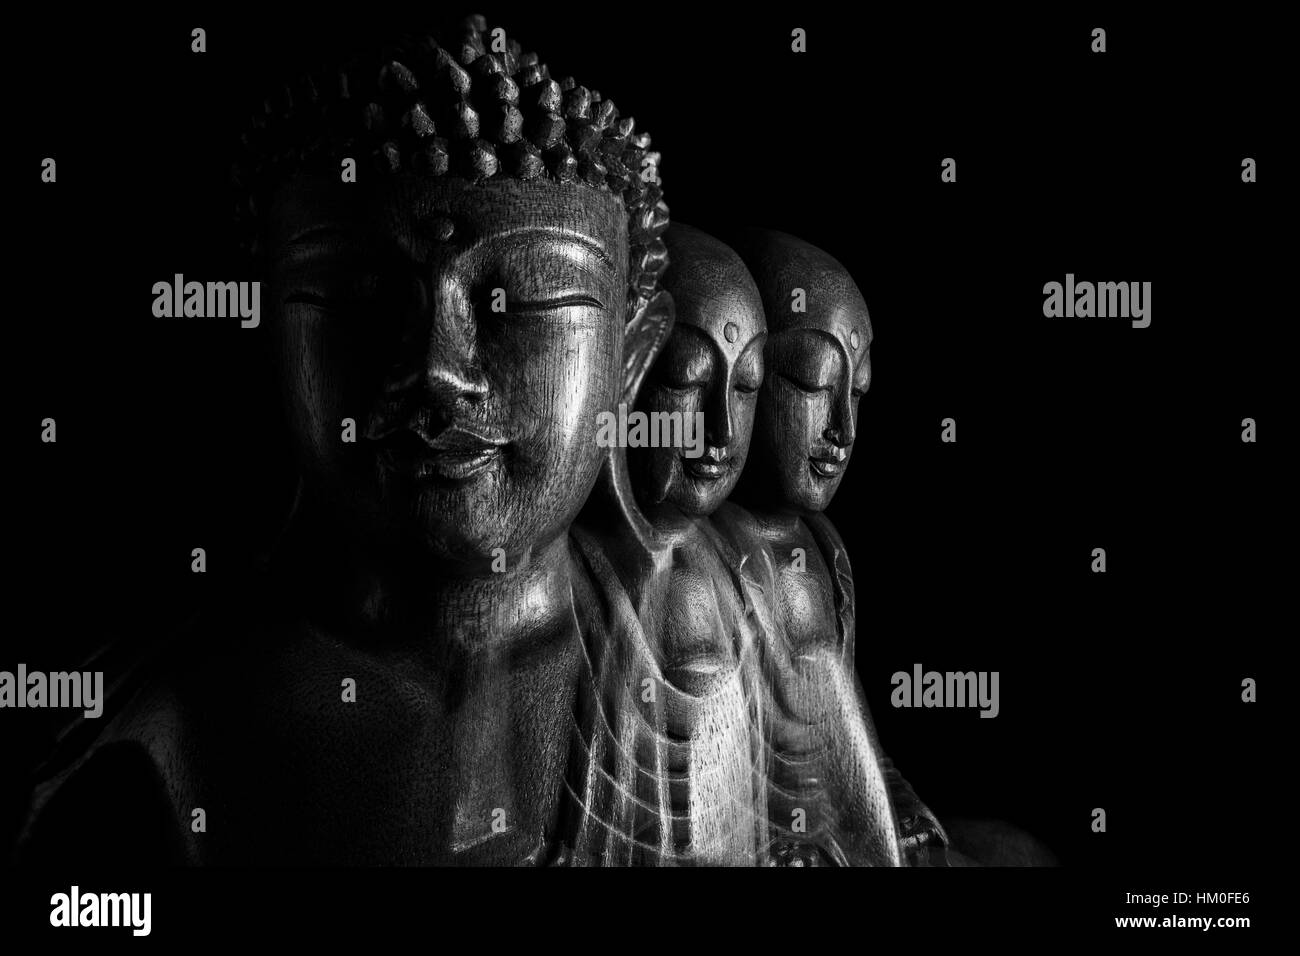 Buddha sculpture 佛/像/佛像 and Ksitigarbha sculpture 地藏王/菩薩/地藏王菩薩/地藏菩薩/像 Stock Photo